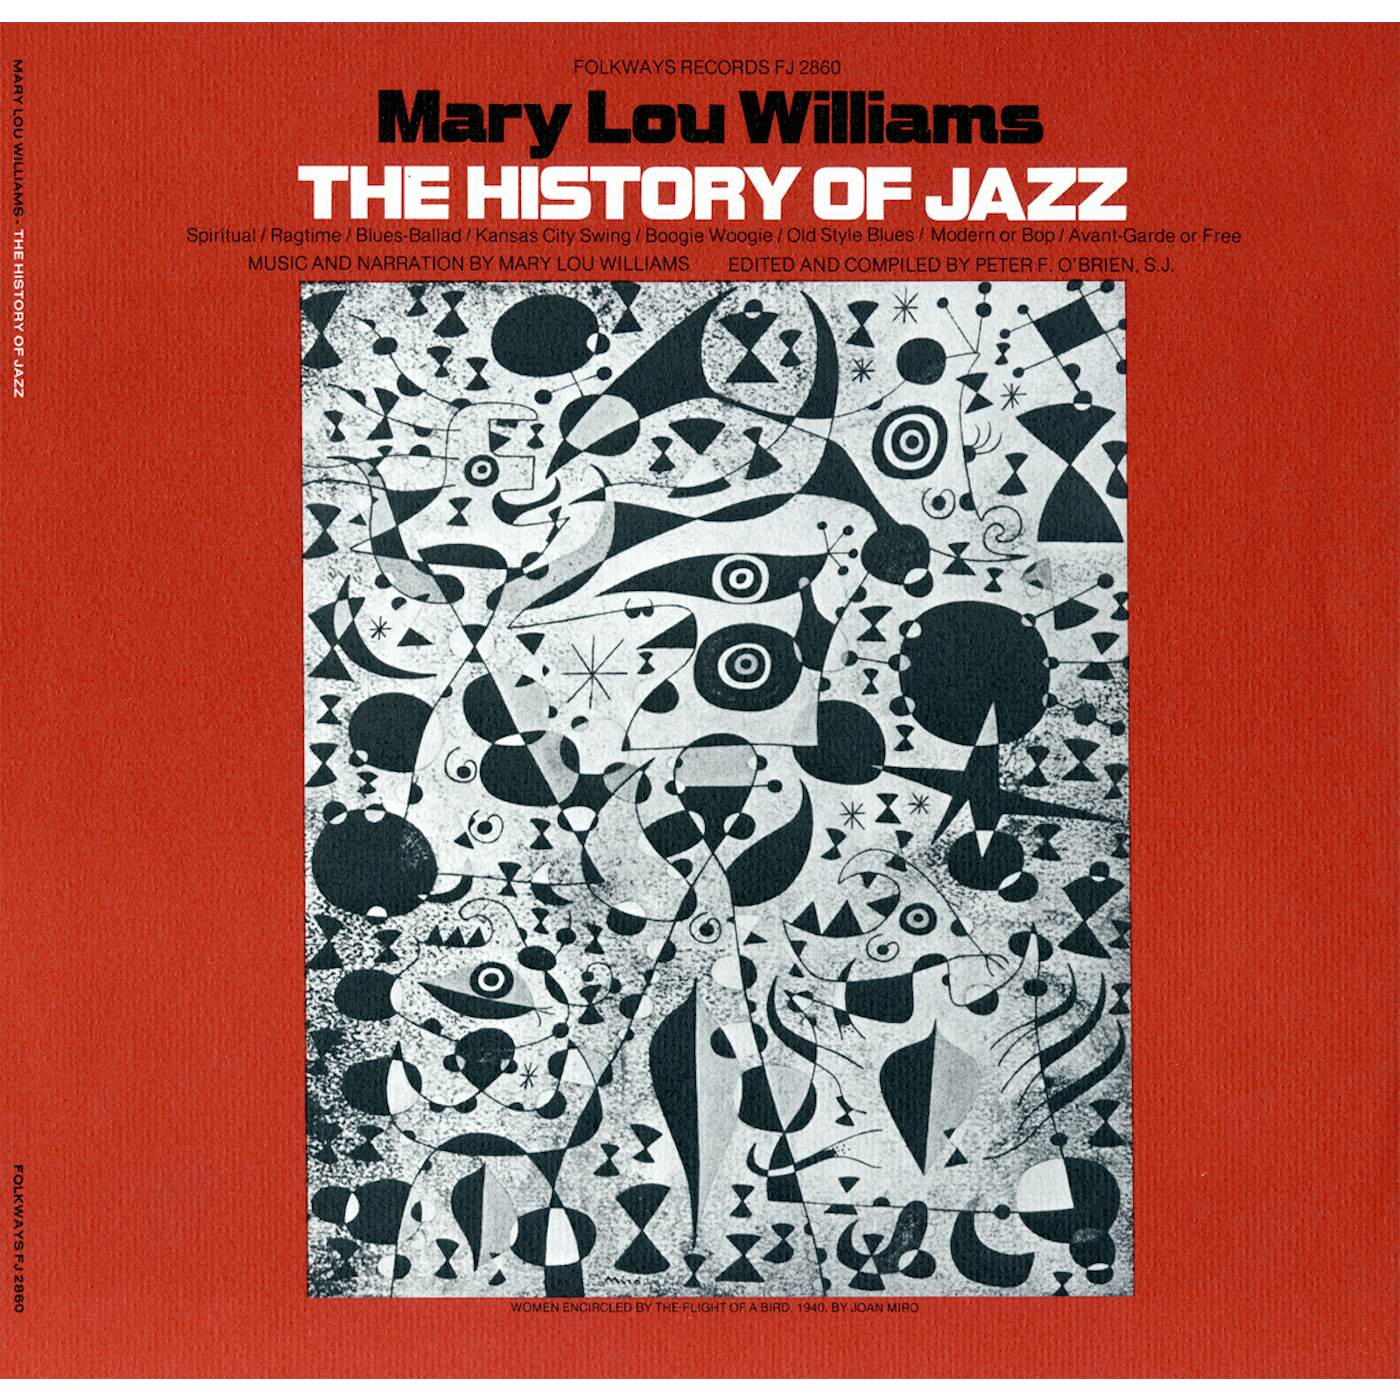 Mary Lou Williams THE HISTORY OF JAZZ CD